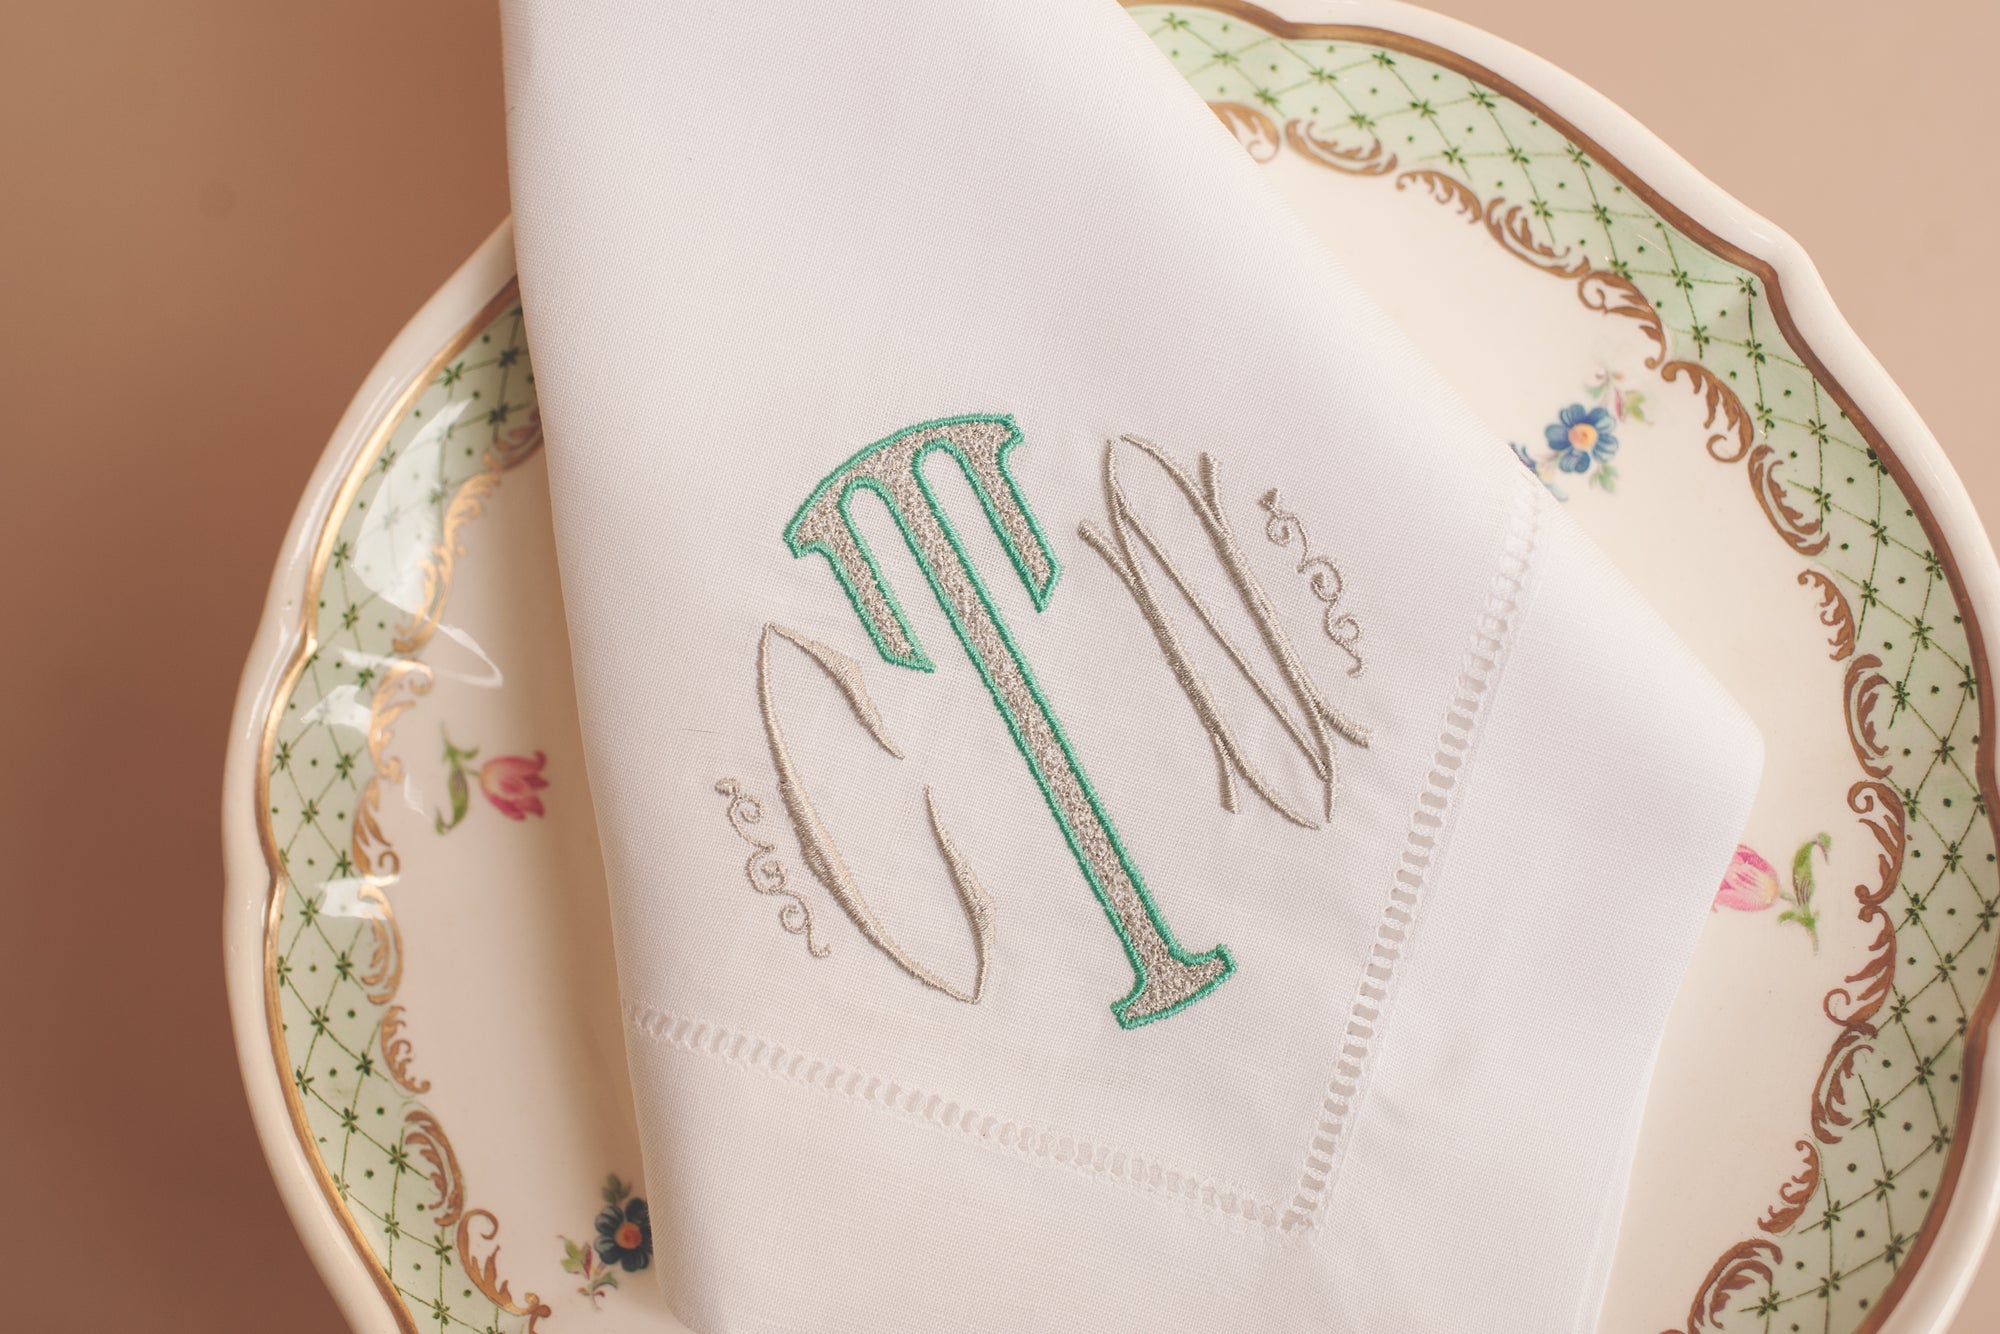 All Cotton and Linen Cloth Napkins - Linen Dinner Napkins - White Linen Napkins Set of 4 - Wedding Table Napkins - Blue Linen Napkins - Orta Linen